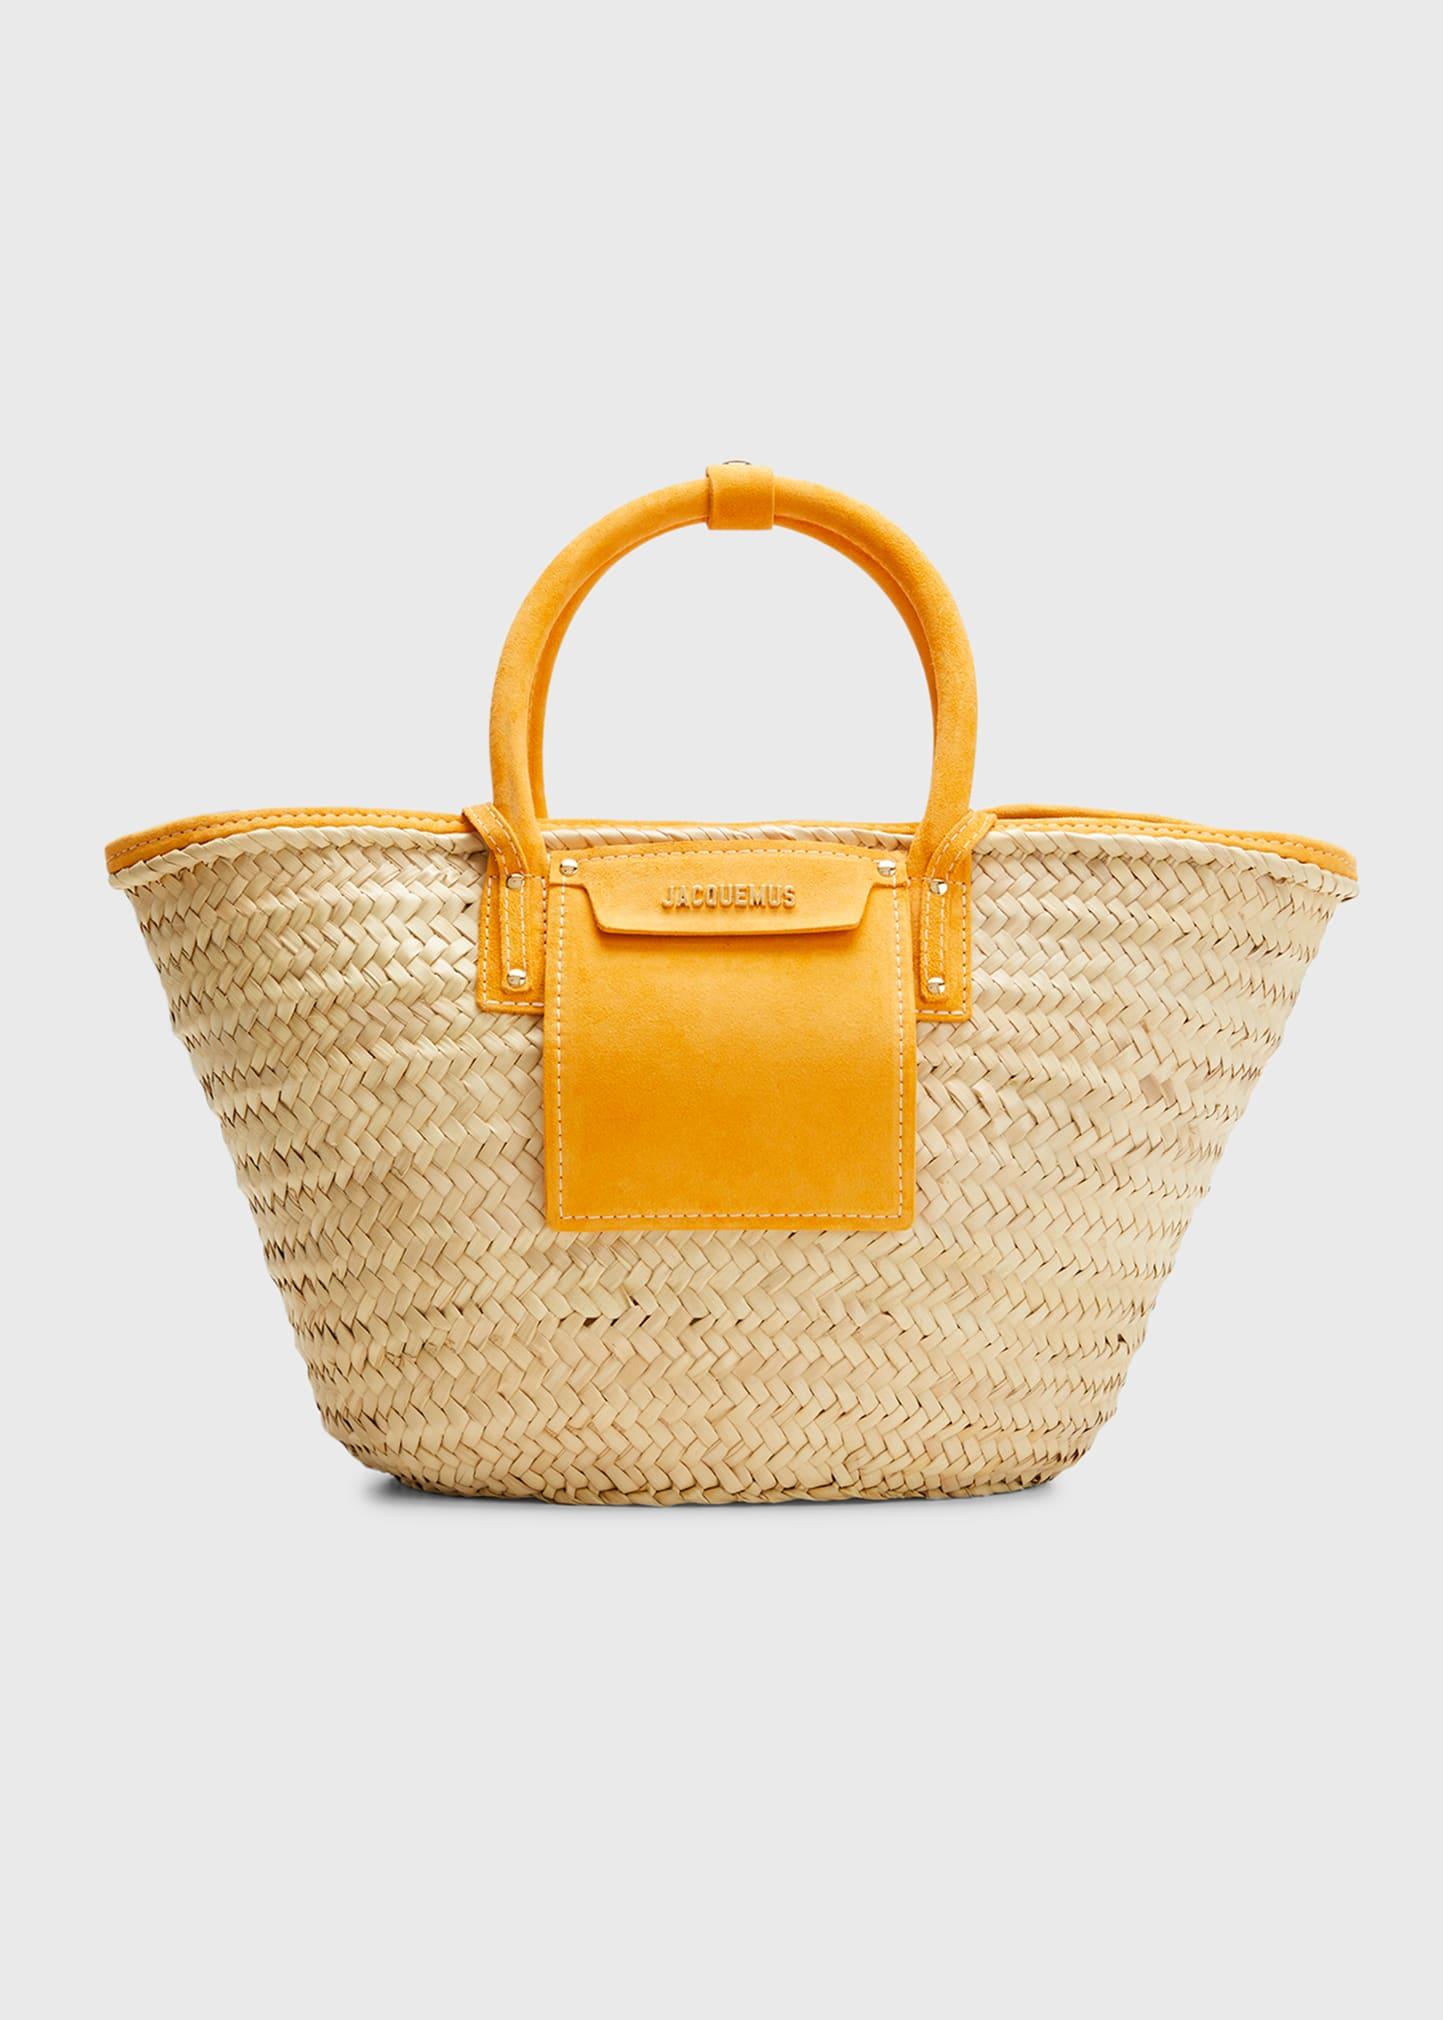 Jacquemus Le Panier Soleil Basket Bag With Suede Trim in Orange | Lyst